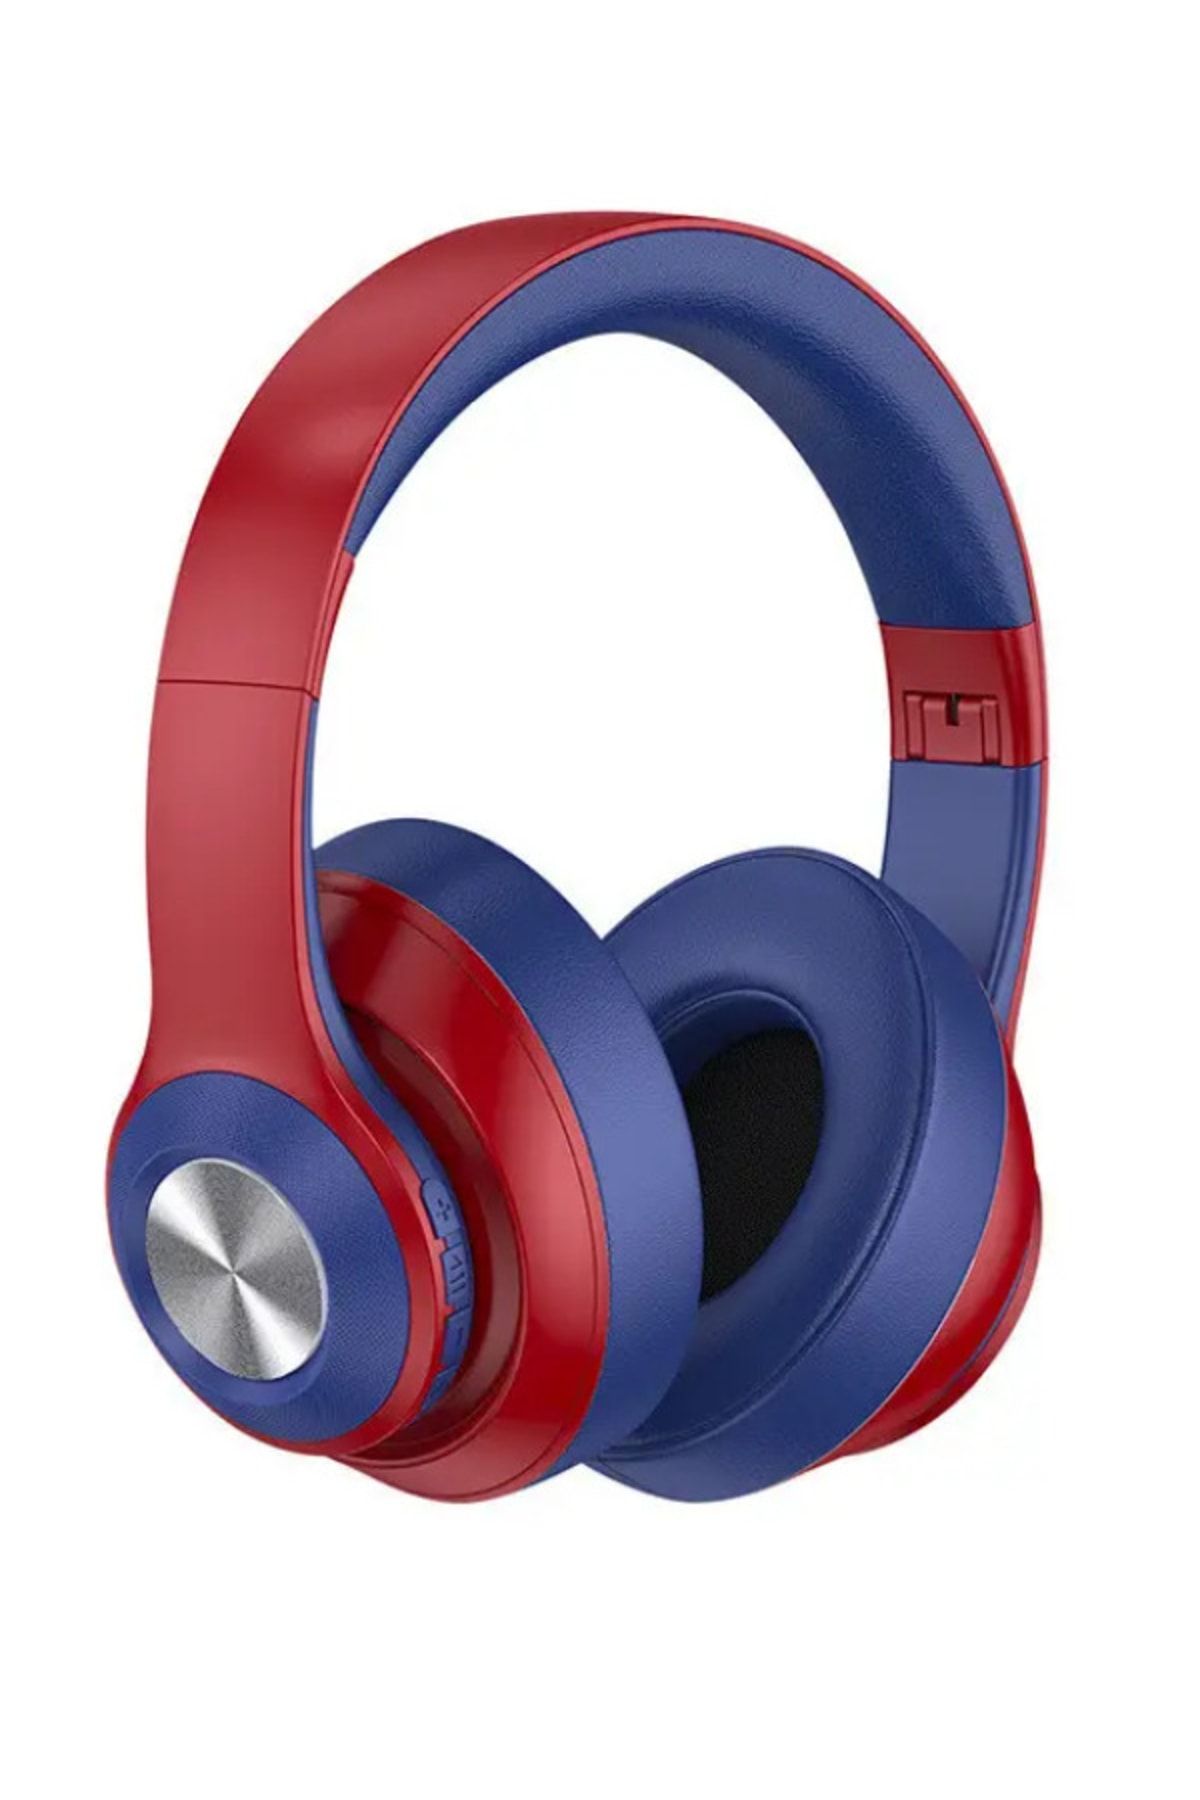 Teknoloji Gelsin Sn-85 Kulaklık Anc 6d Stereo Süper Bass Kablosuz Bluetooth Kulaküstü Kulaklık Fm Sd